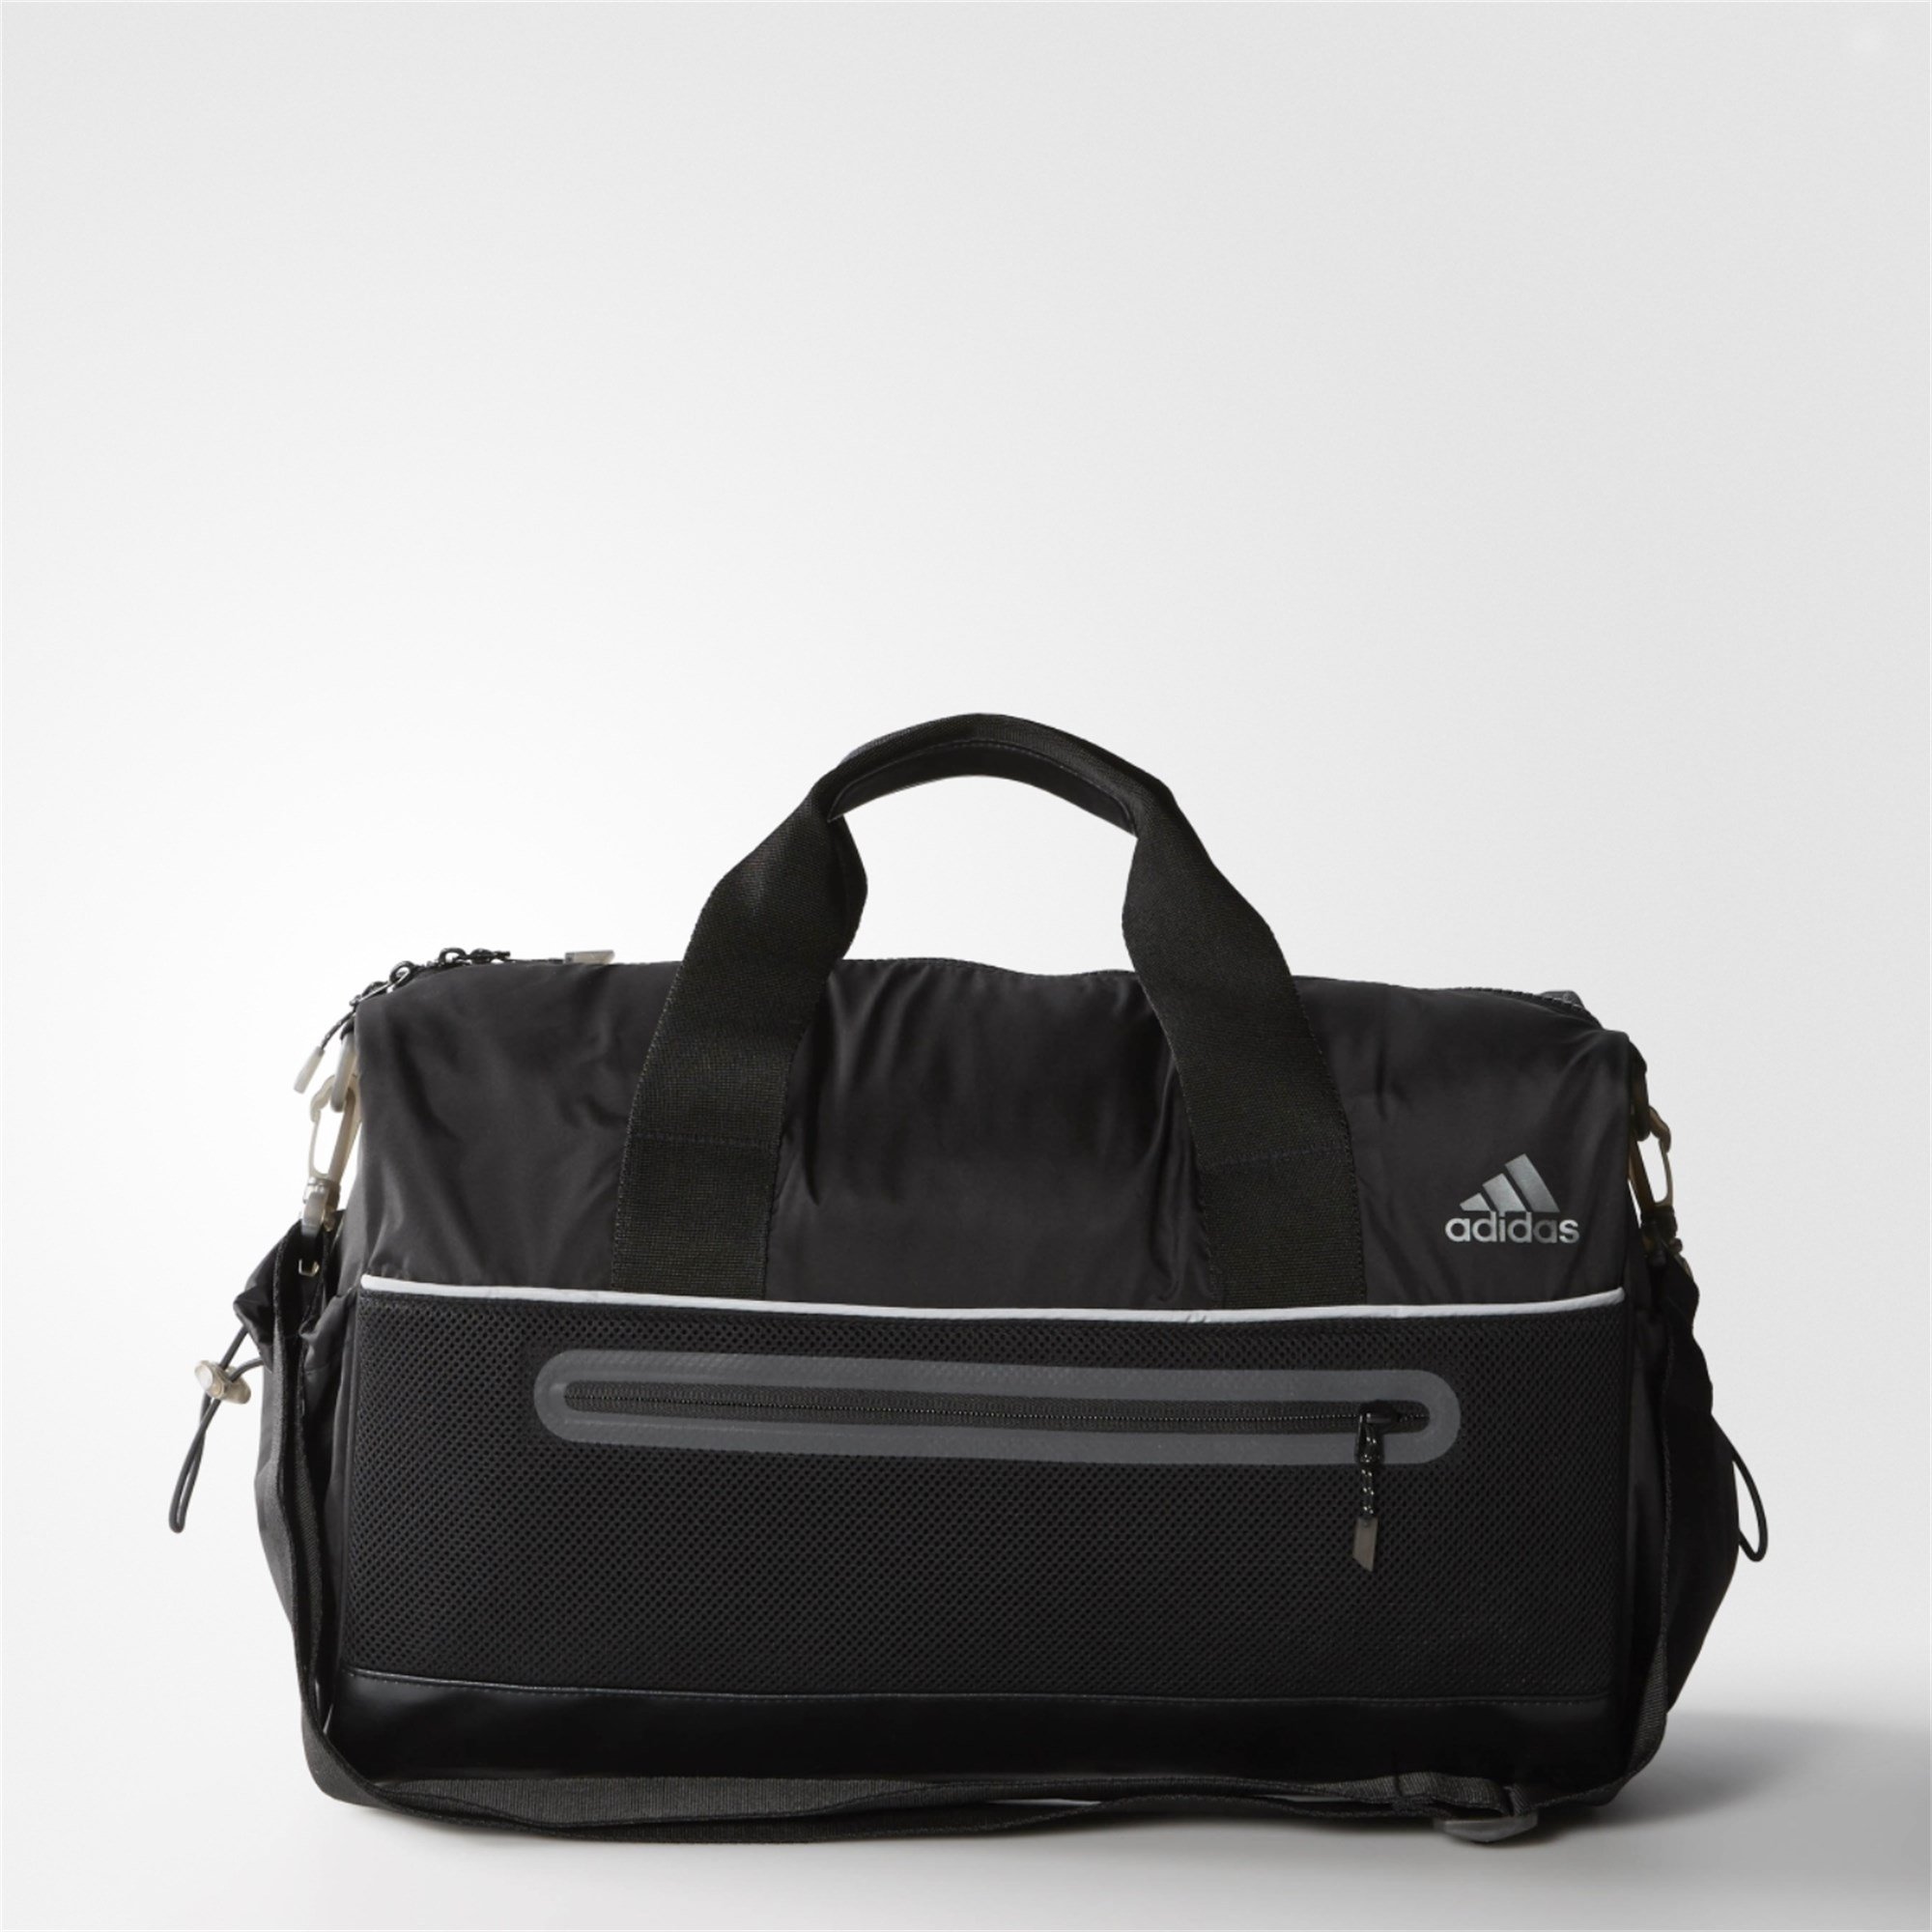 adidas Gym Team Bag 2 Bayan Spor Çanta Ürün kodu: AJ4275 | Etichet Sport